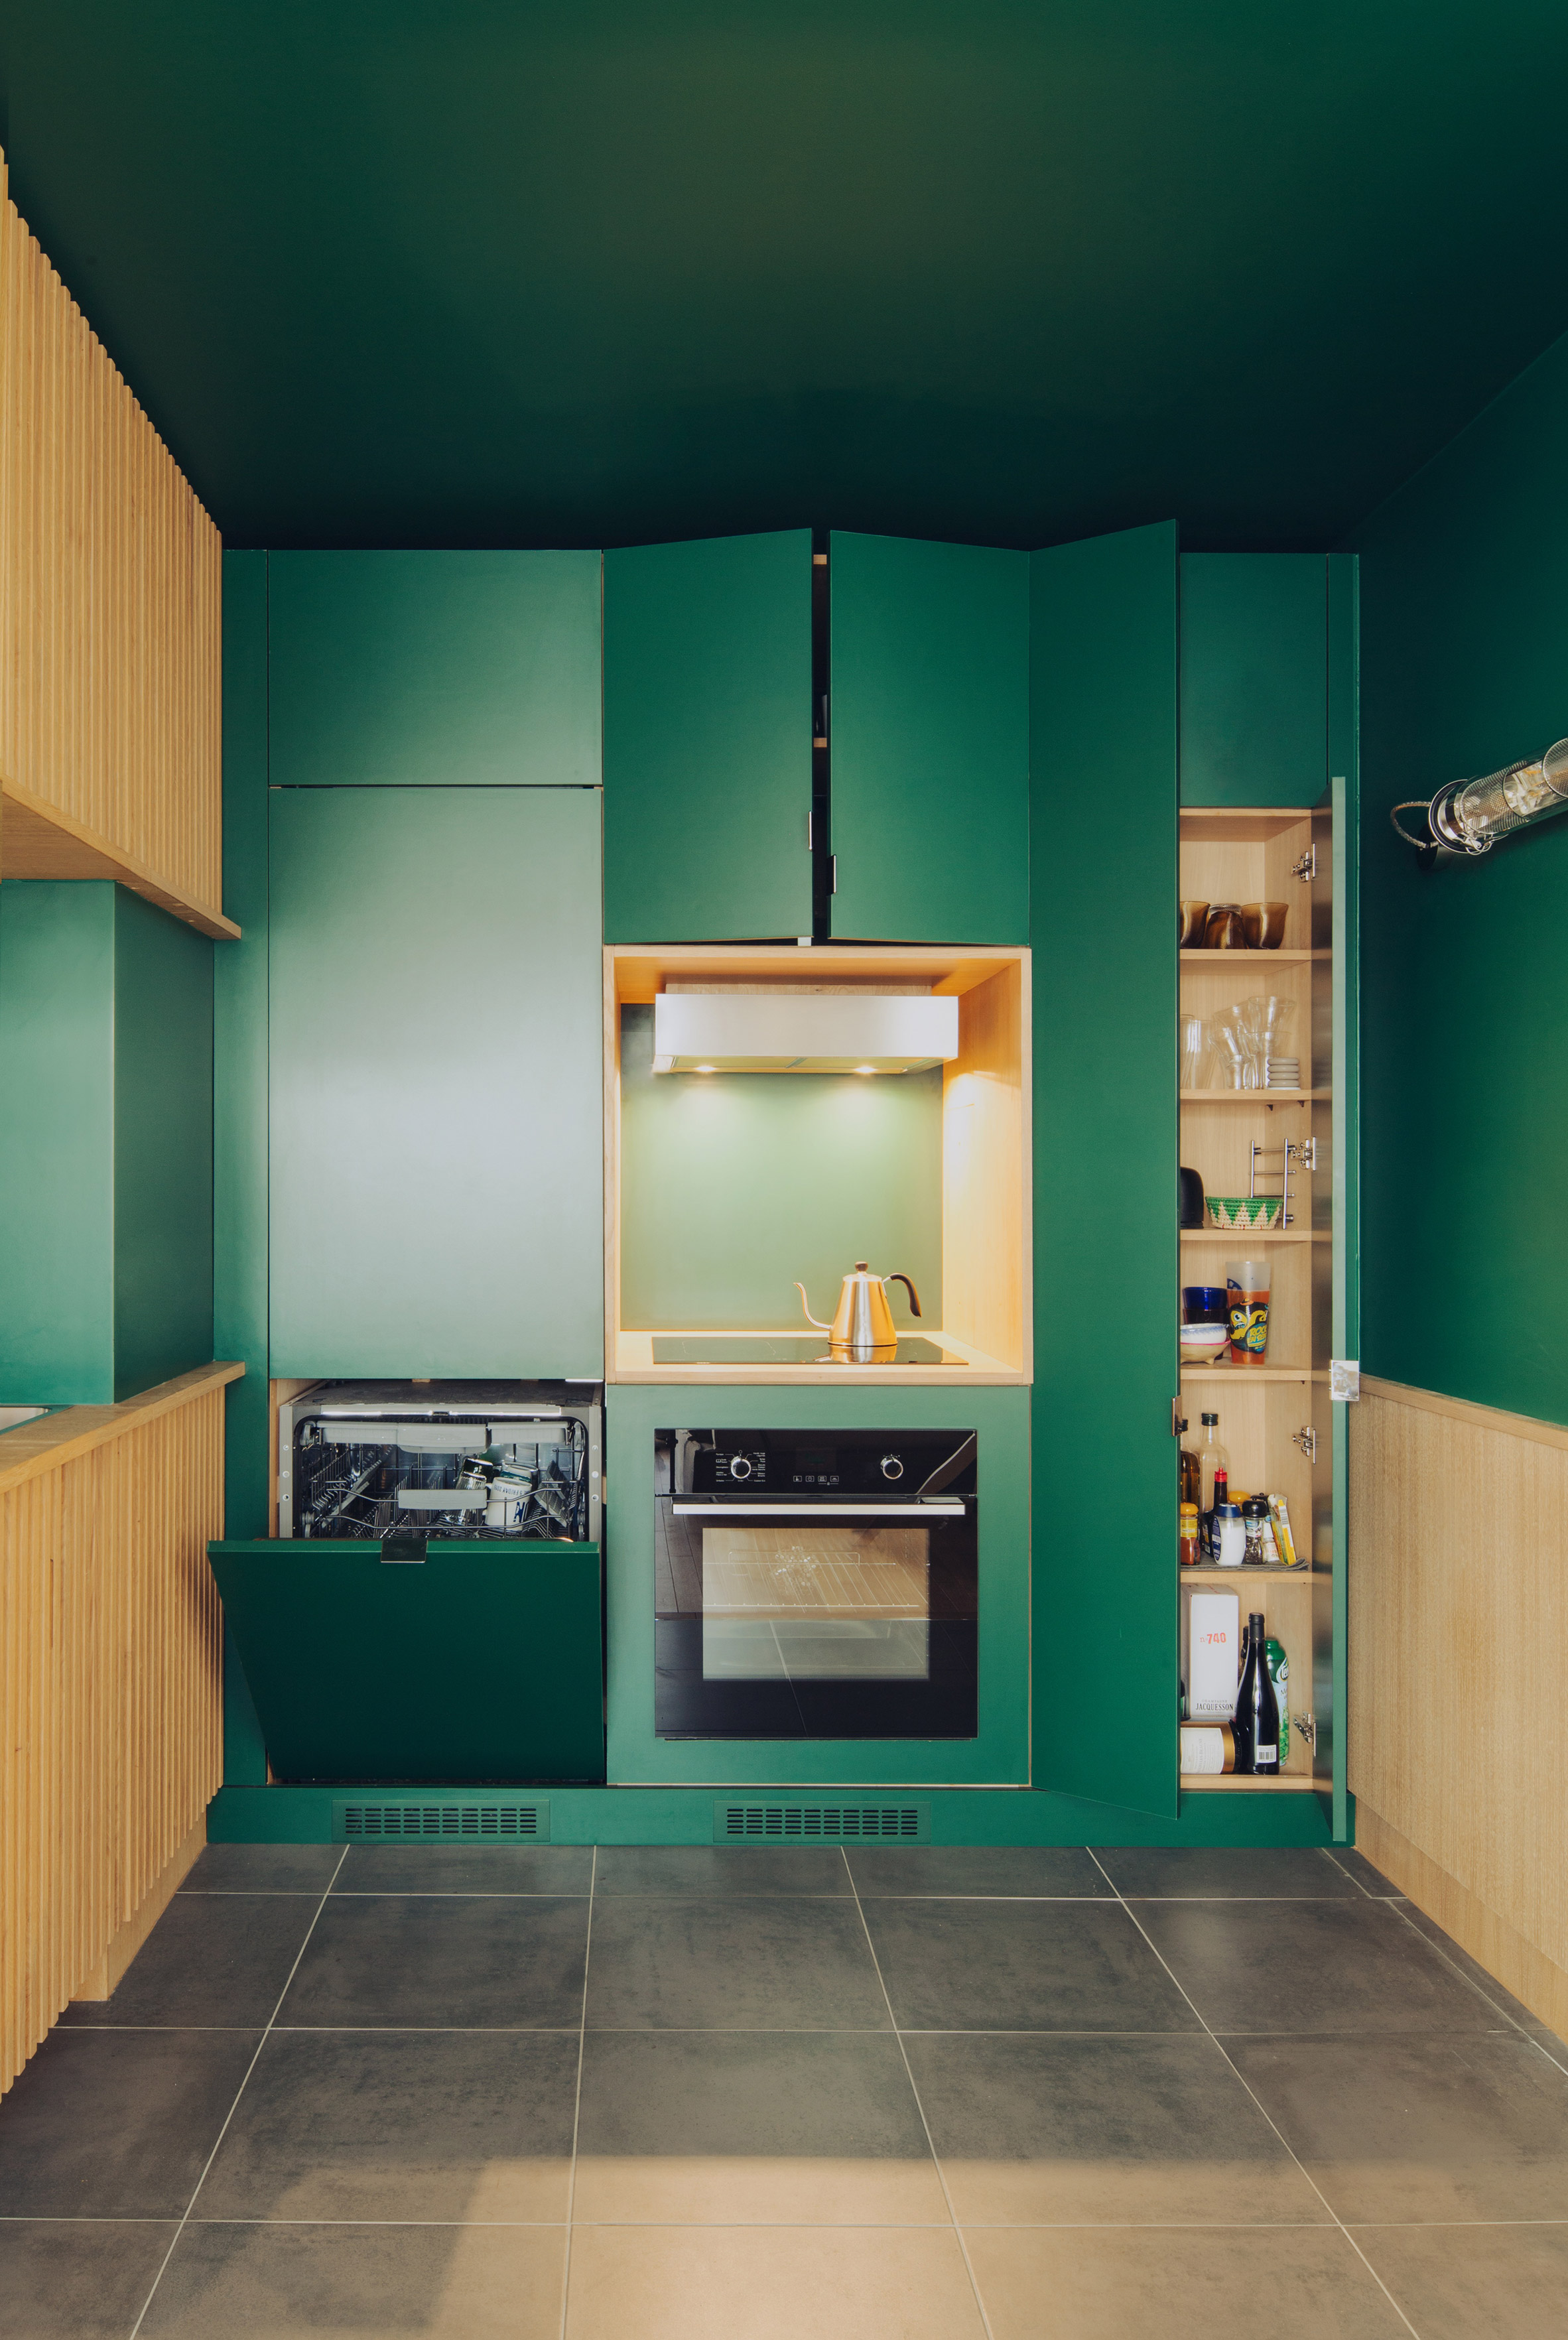 The Green Kitchen Atelier Sagitta Interiors Residential Paris France Dezeen 2364 Col 4 